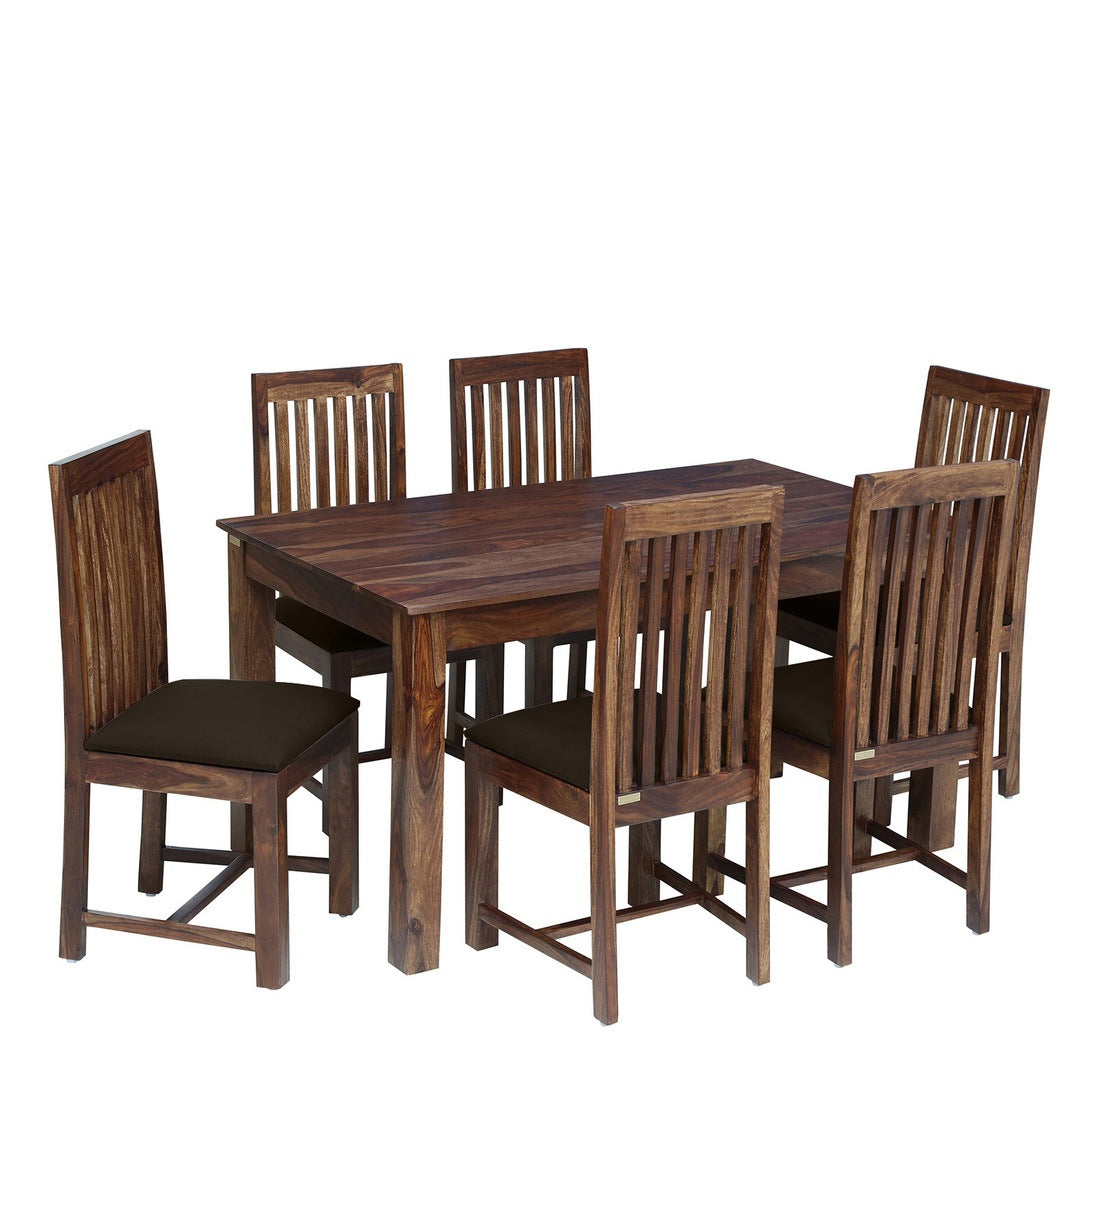 Peter Sheesham Wood 6 Seater Dining Set For Dining Room in Provincial Teak Finish - Rajwada Furnish